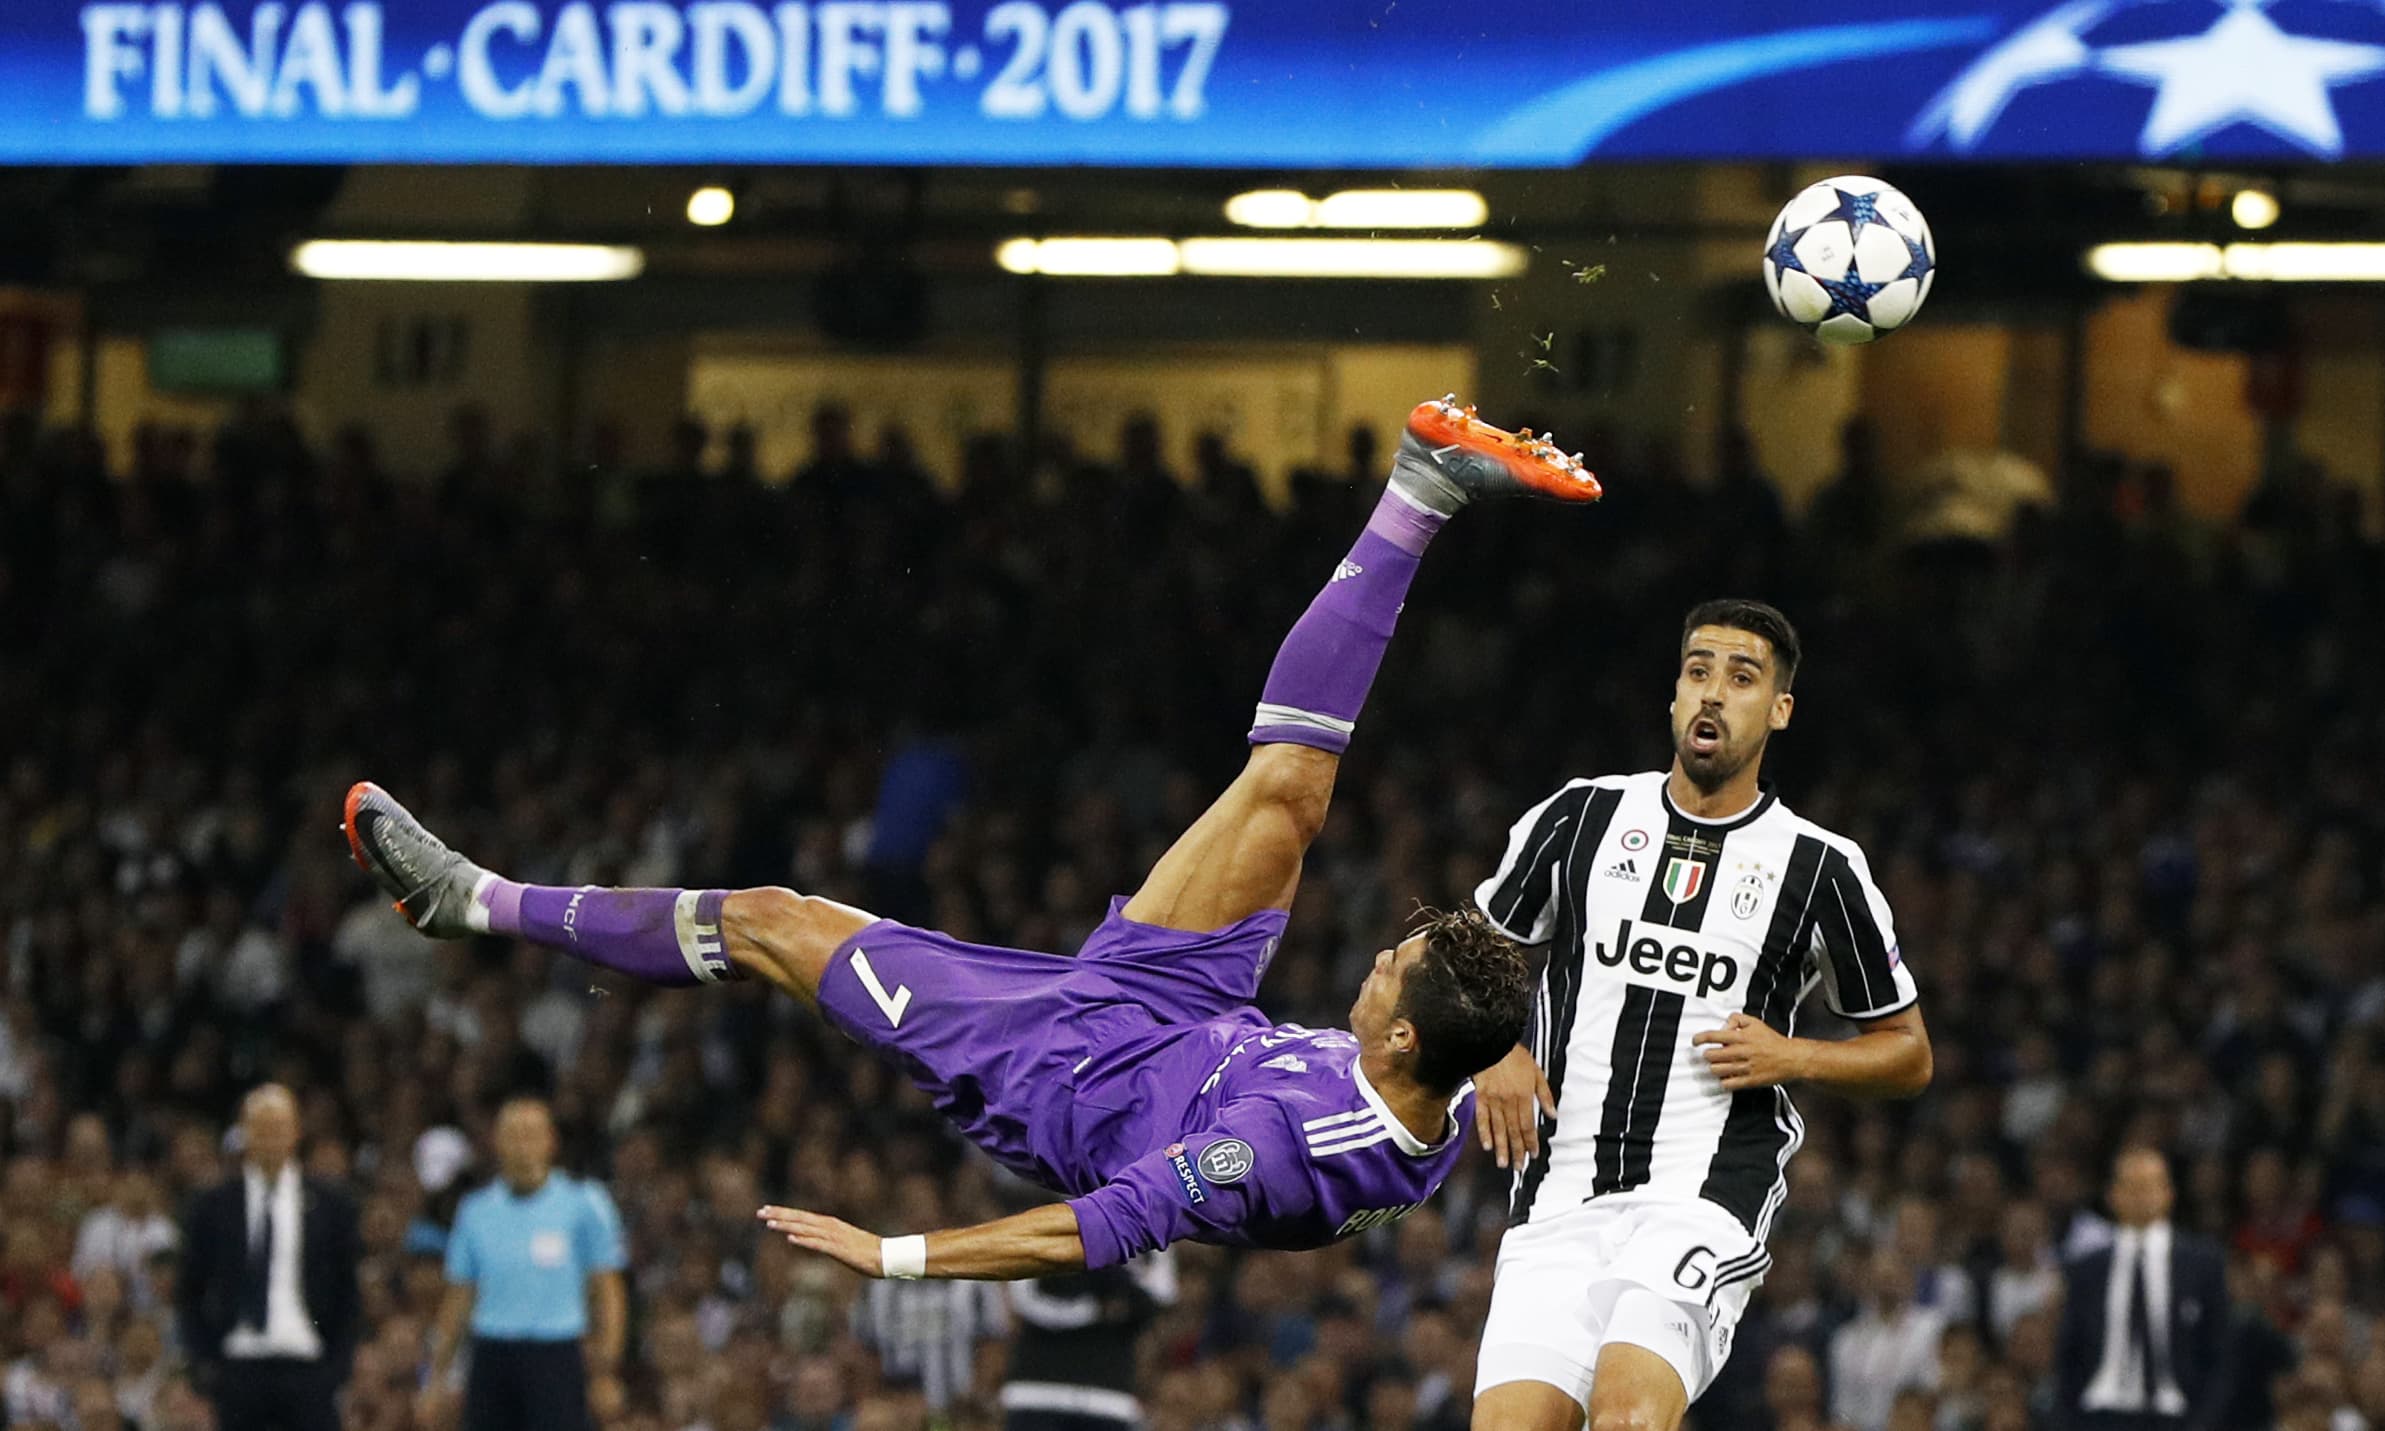 Cristiano Ronaldo Overhead Kick Wallpapers Wallpaper Cave